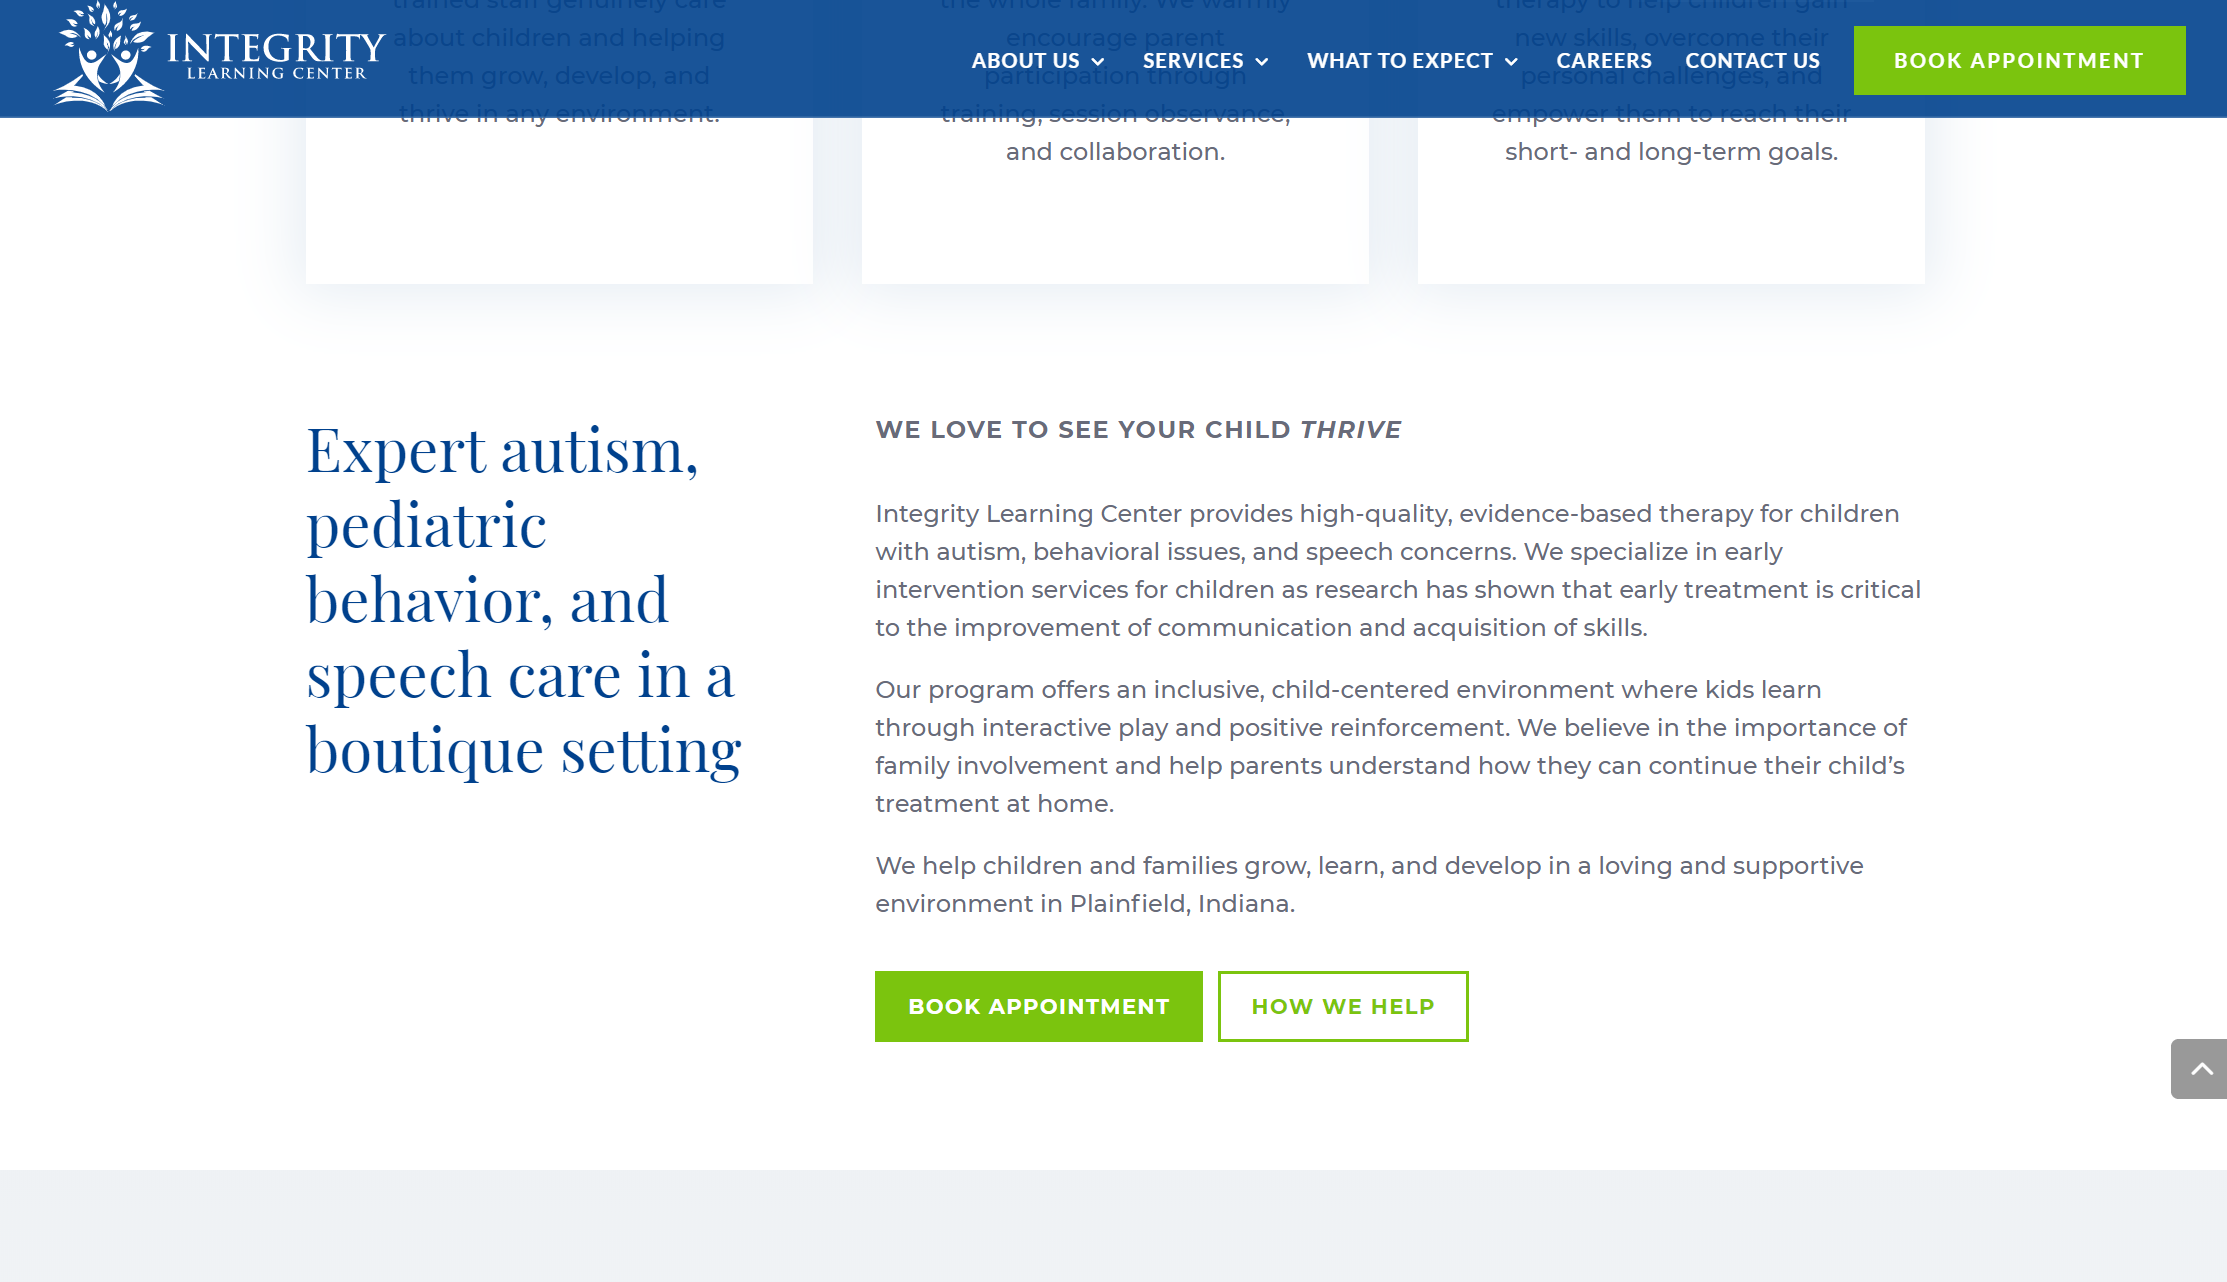 StoryBrand Website Examples Walkthrough image